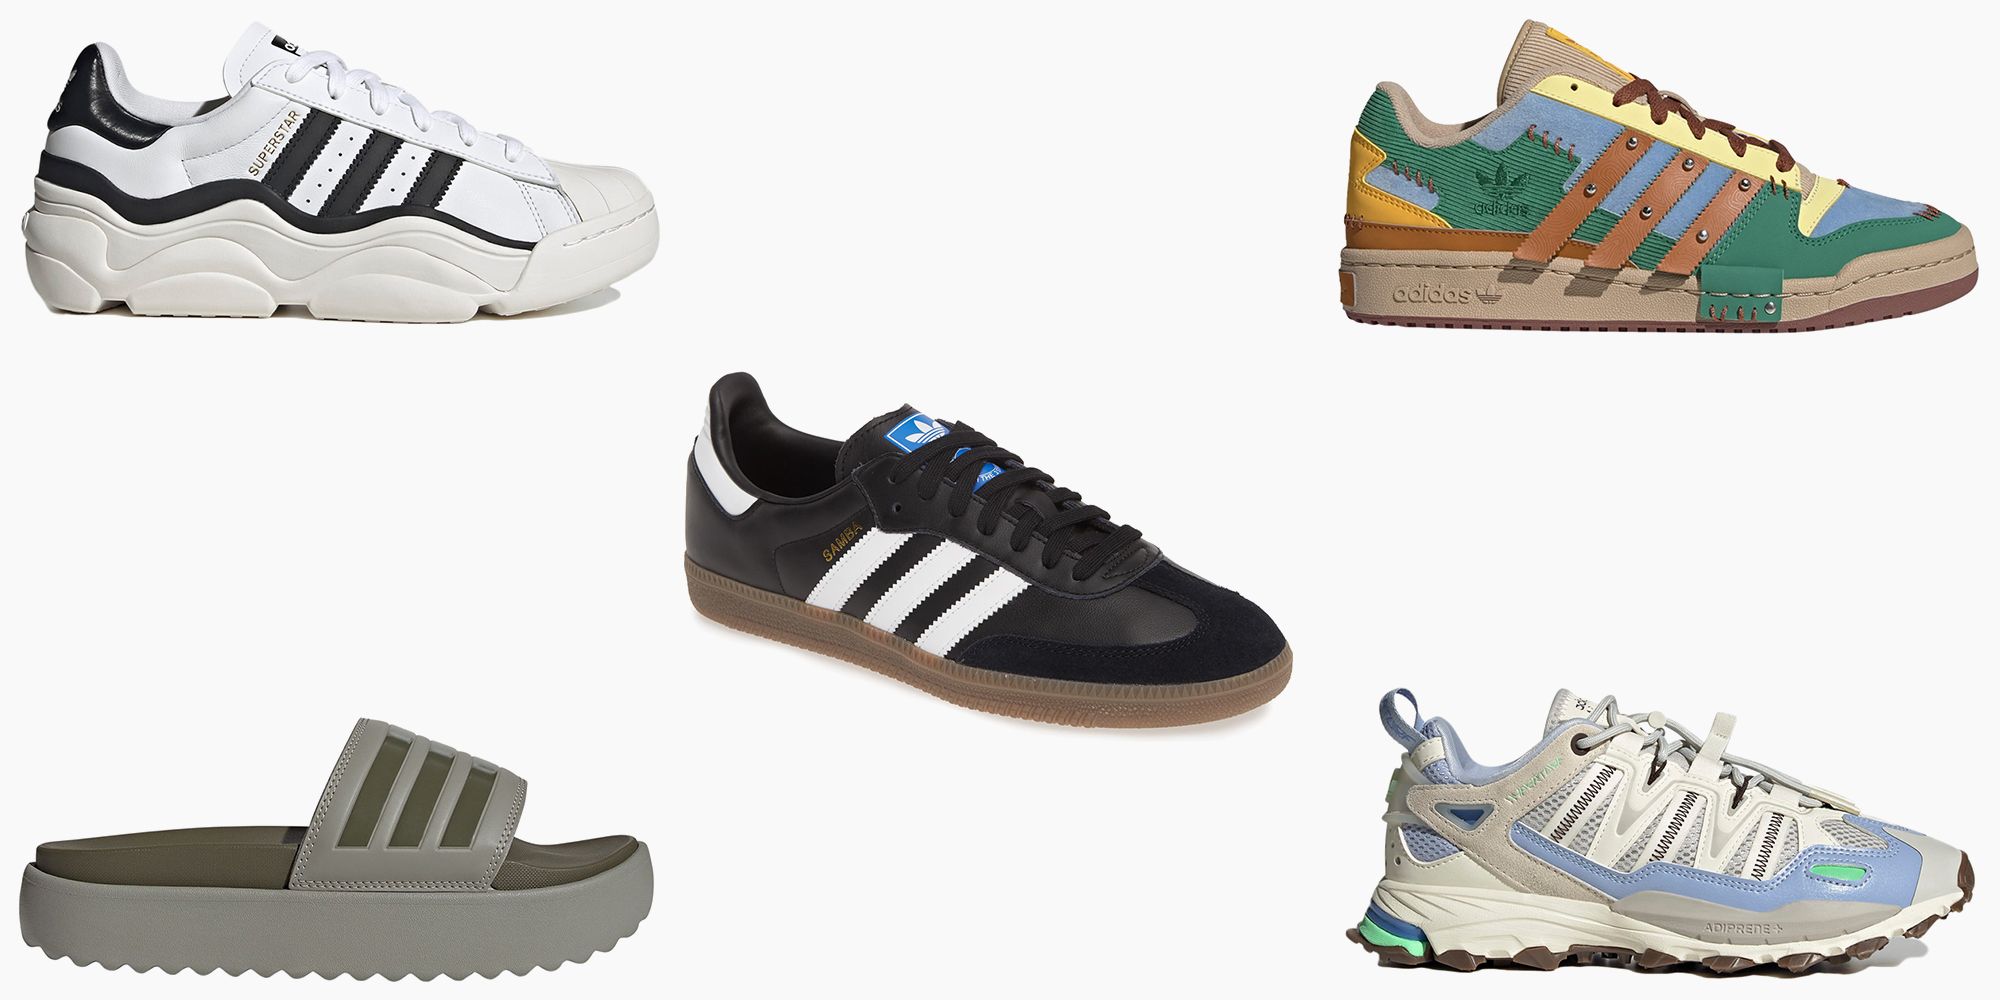 Update 130+ sneakers shoes adidas online